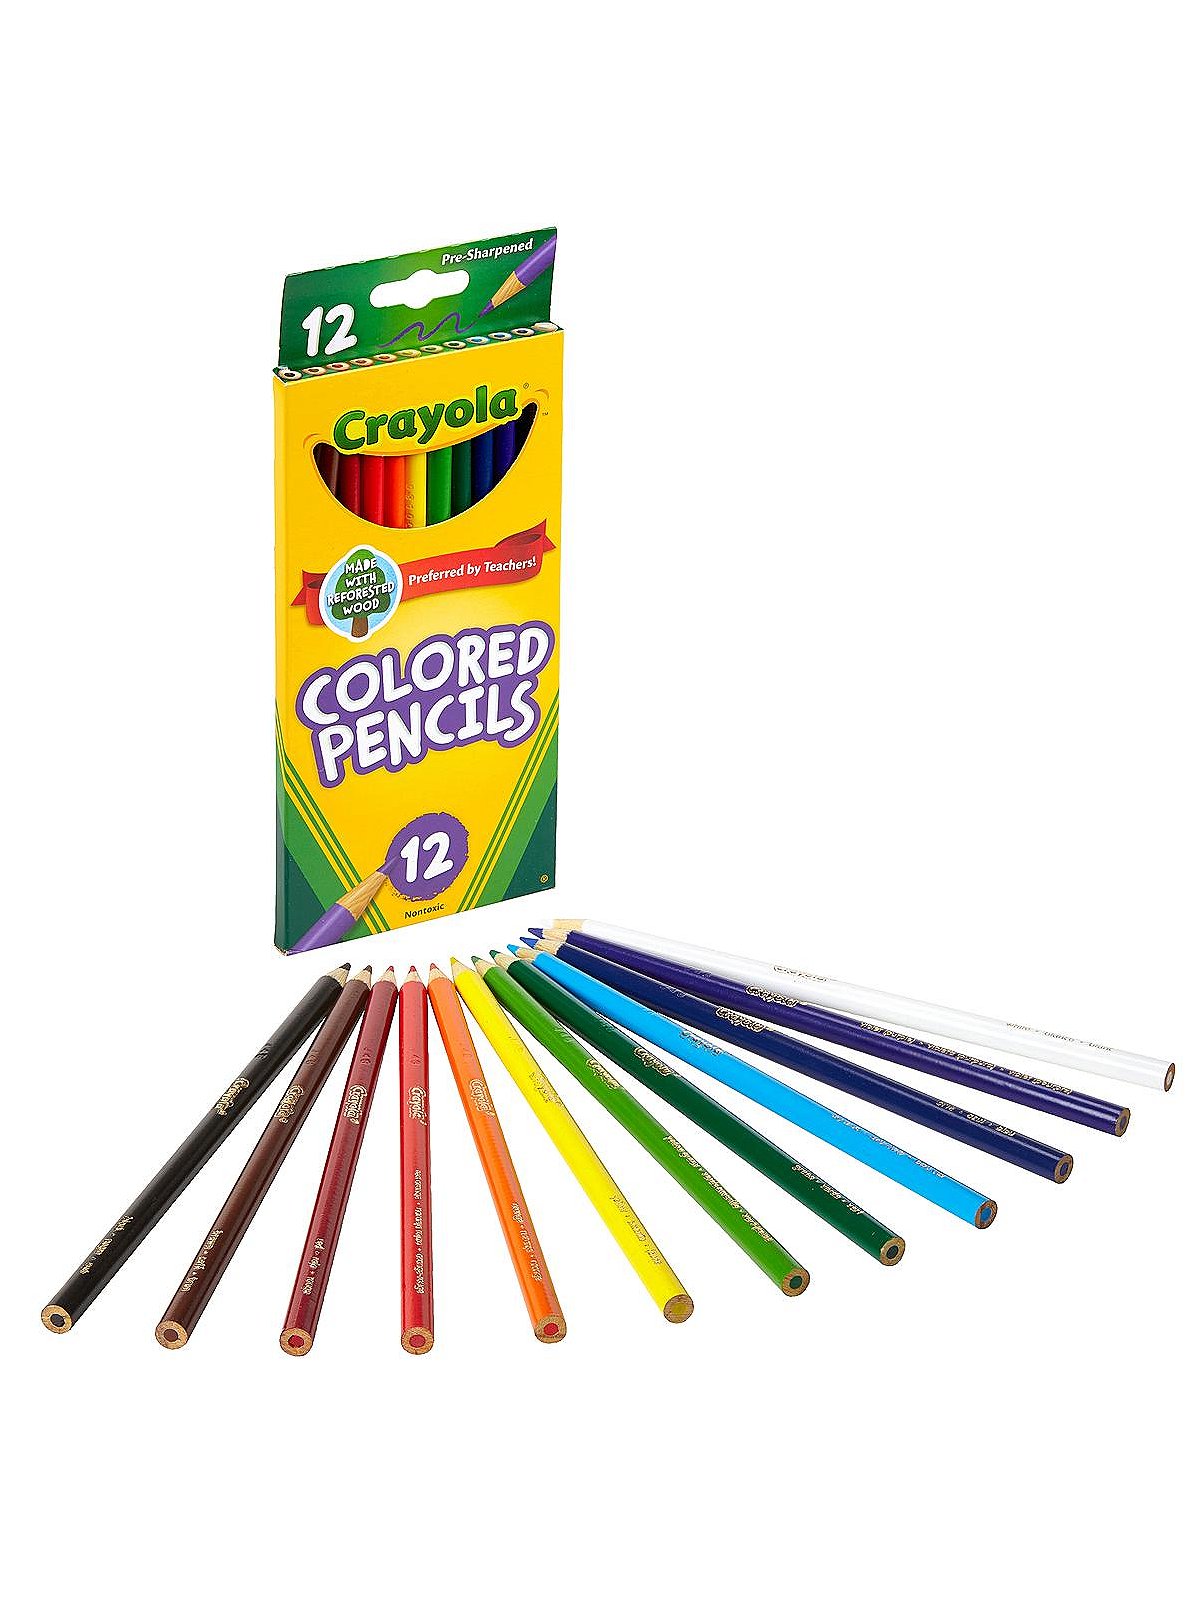 Crayola Metallic Coloured Pencils - 8 Count